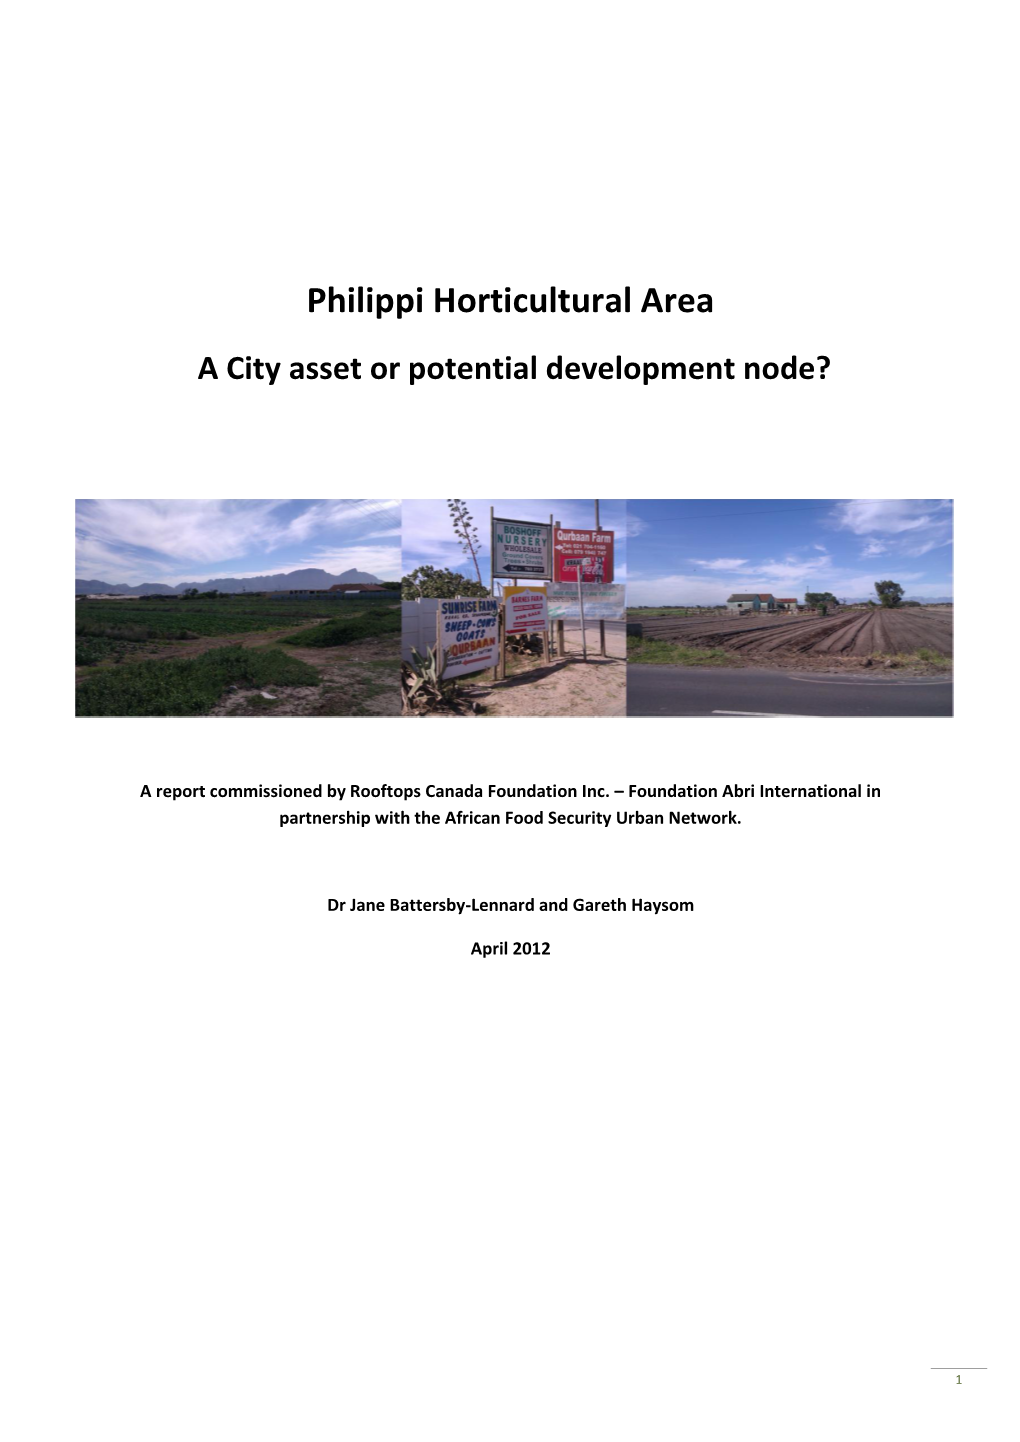 Philippi Horticultural Area a City Asset Or Potential Development Node?